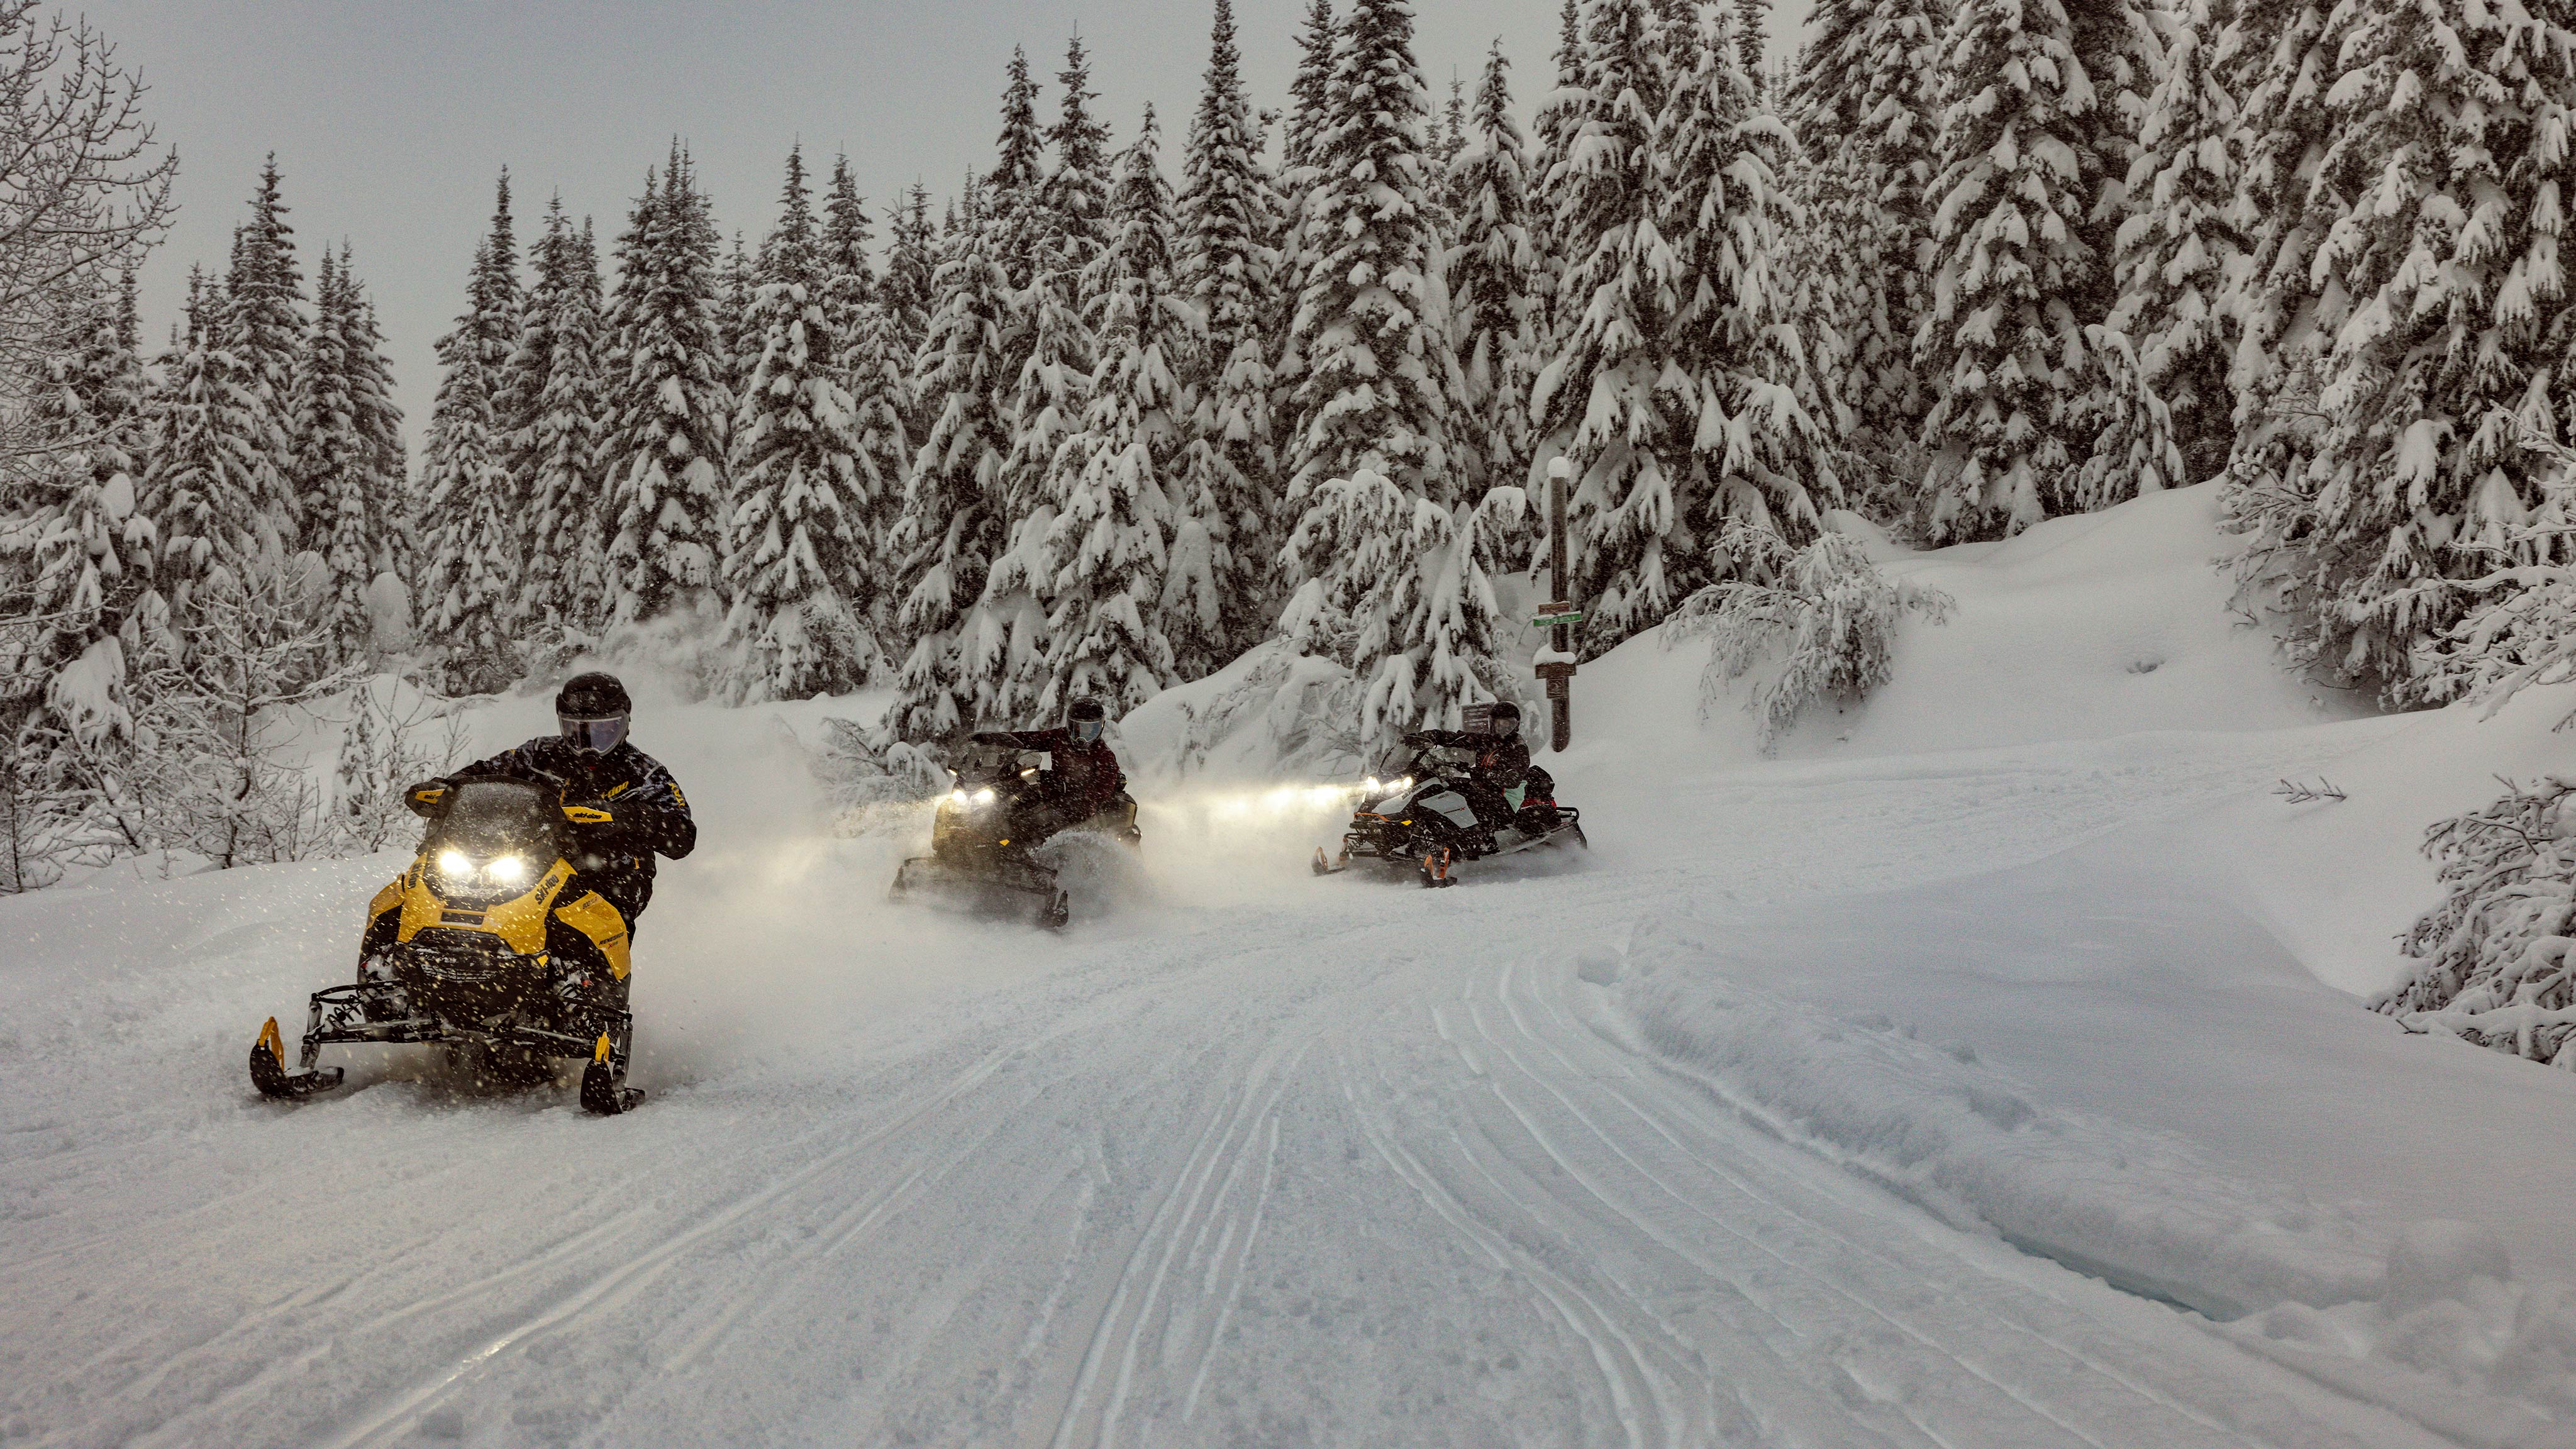 Two Ski-Doo riders in trail on MXZ snowmobiles